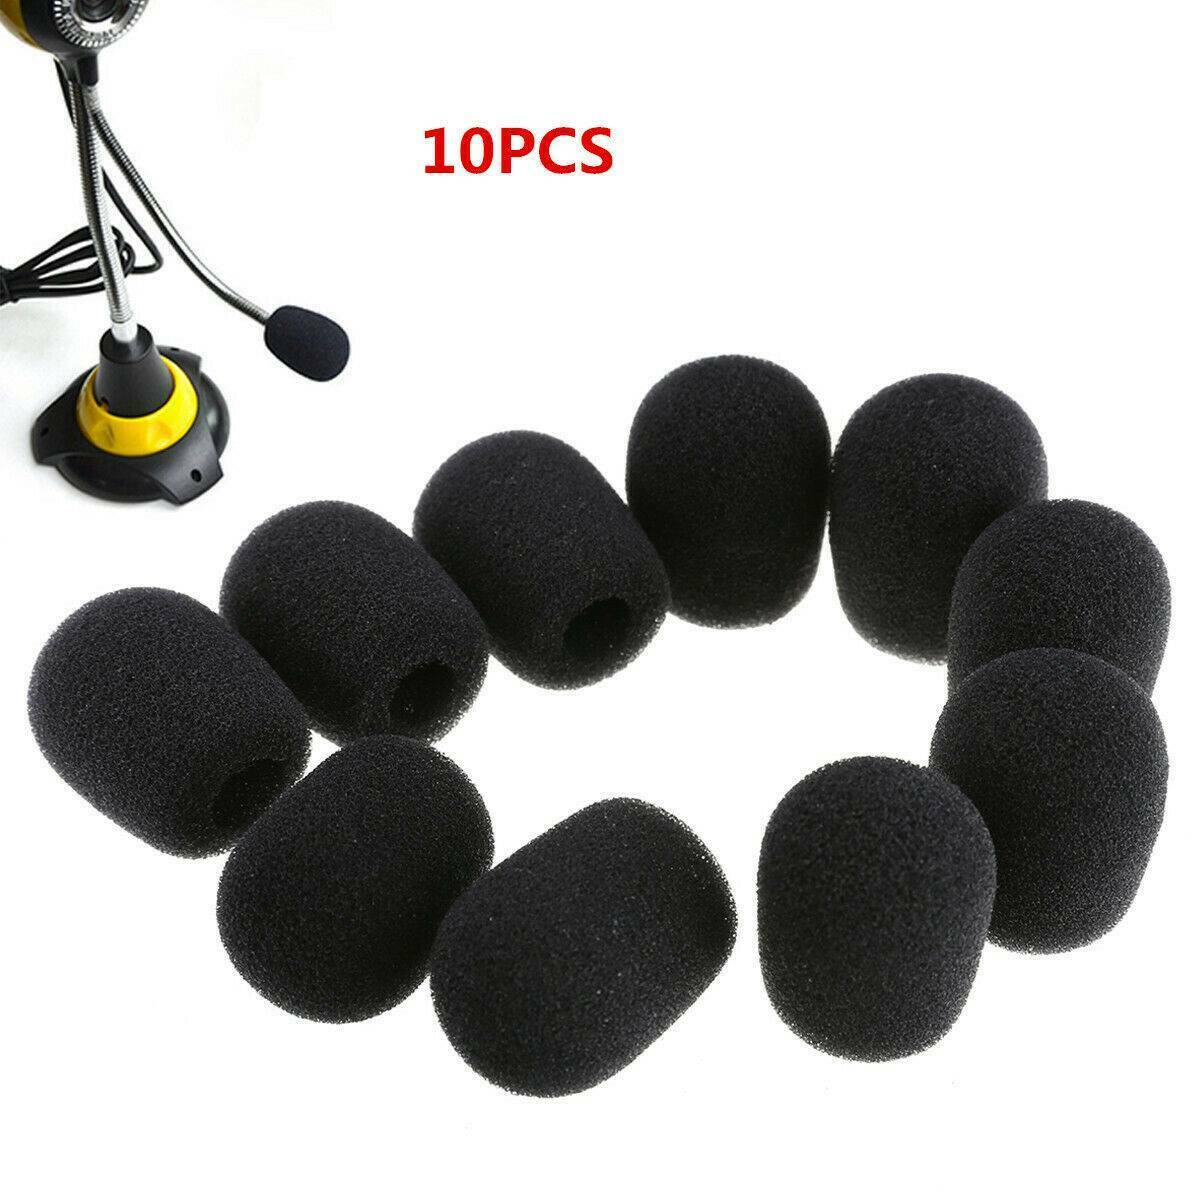 10 X Mini Microphone Windscreen Foam Cover for Lapel Lavalier Headset Mic Black